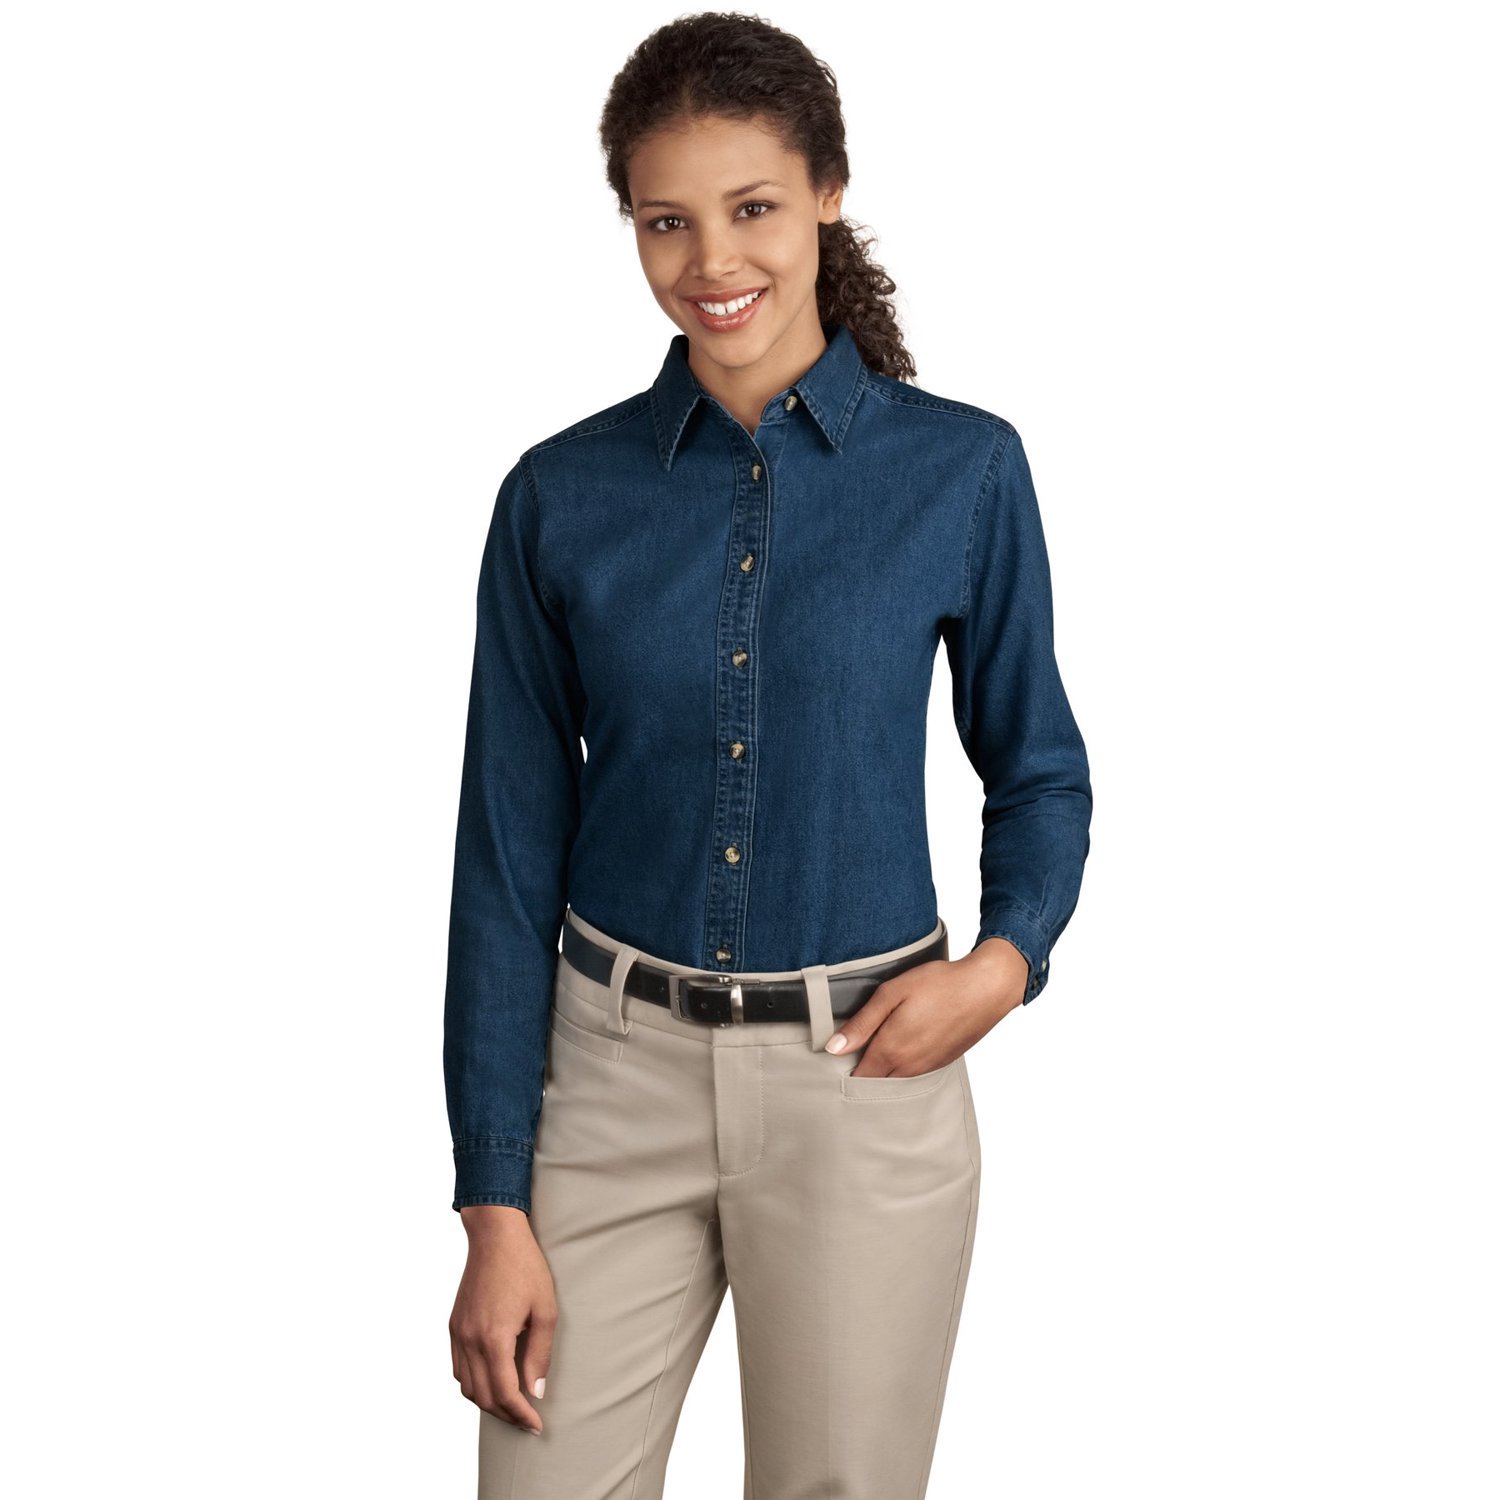 Port & Company Lsp10 Ladies Long Sleeve Value Denim Shirt - image 1 of 1